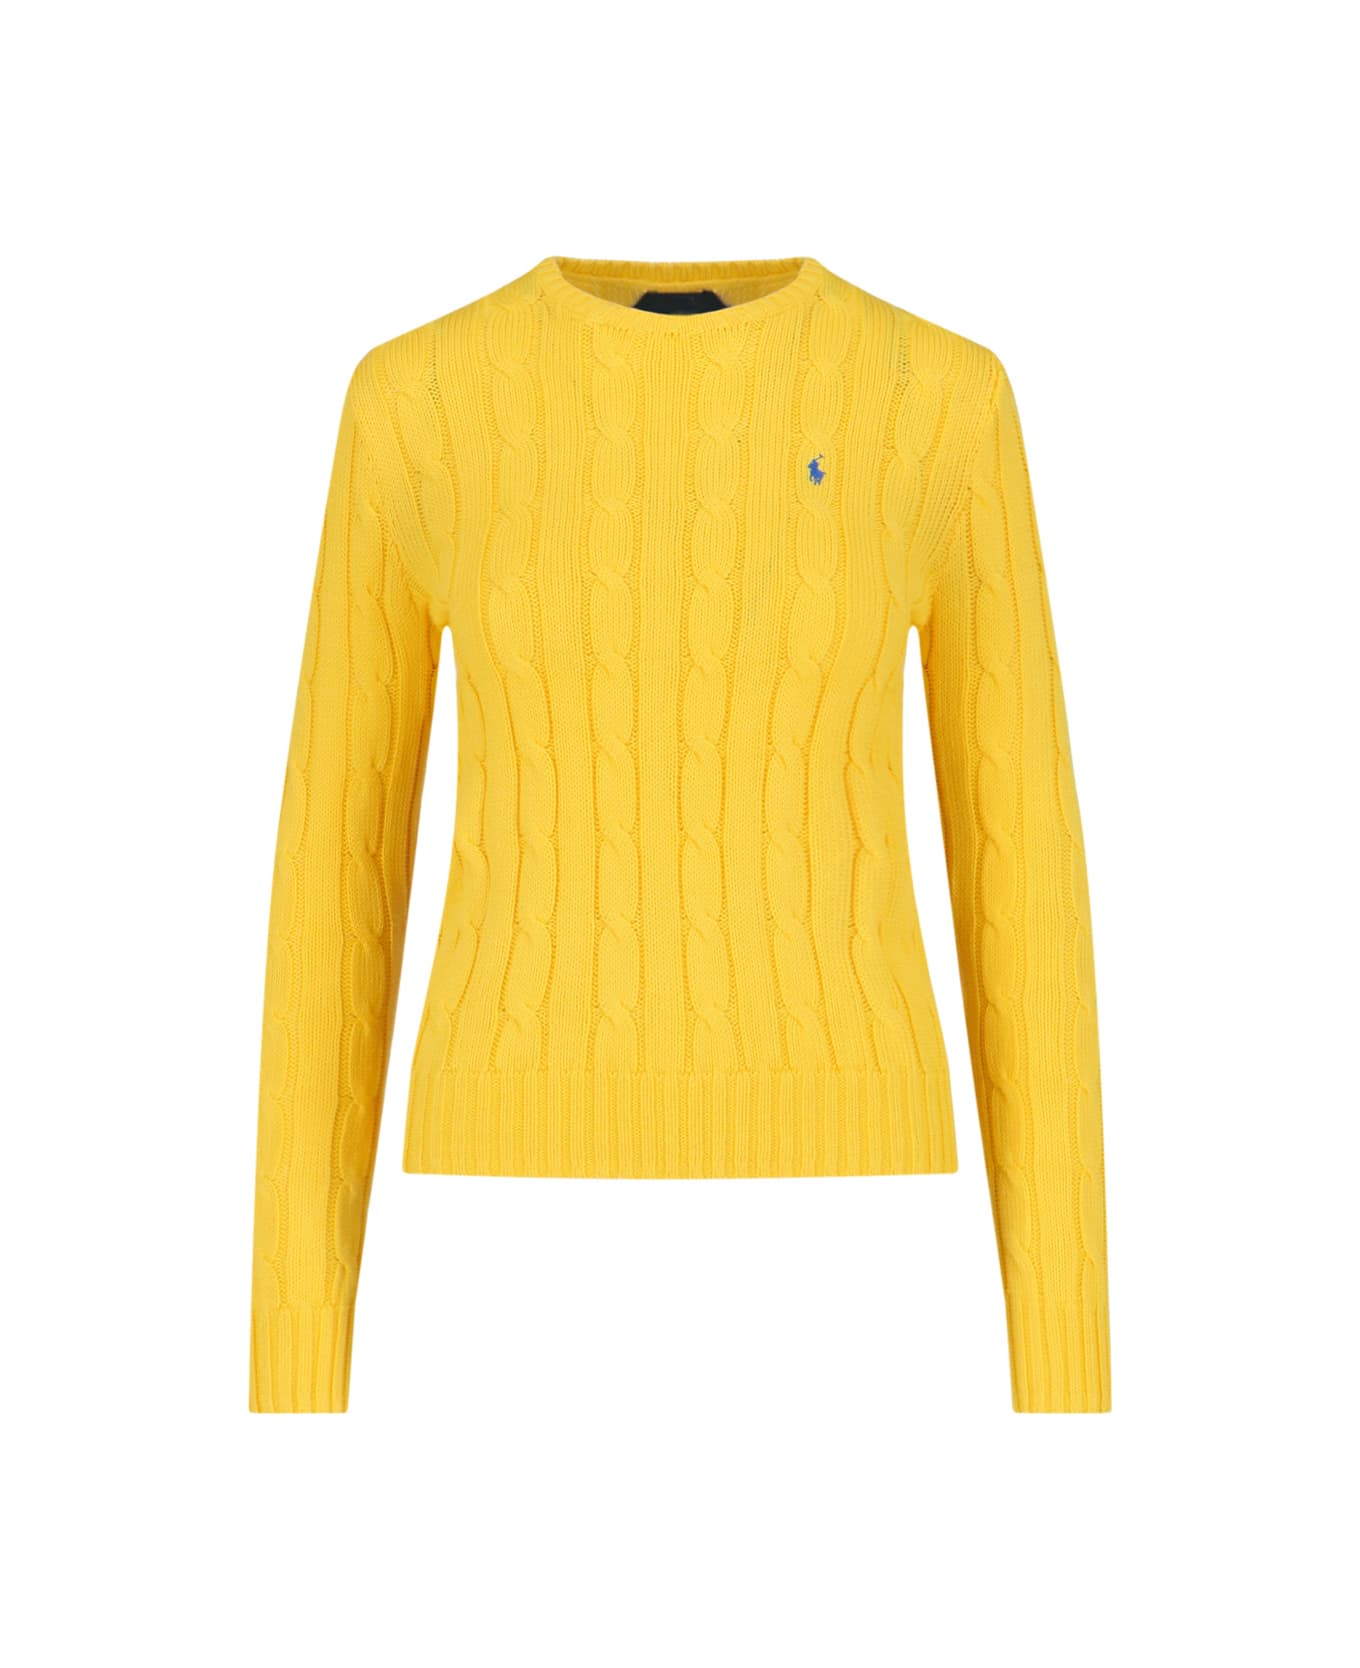 Ralph Lauren Logo Crew Neck Sweater - Yellow